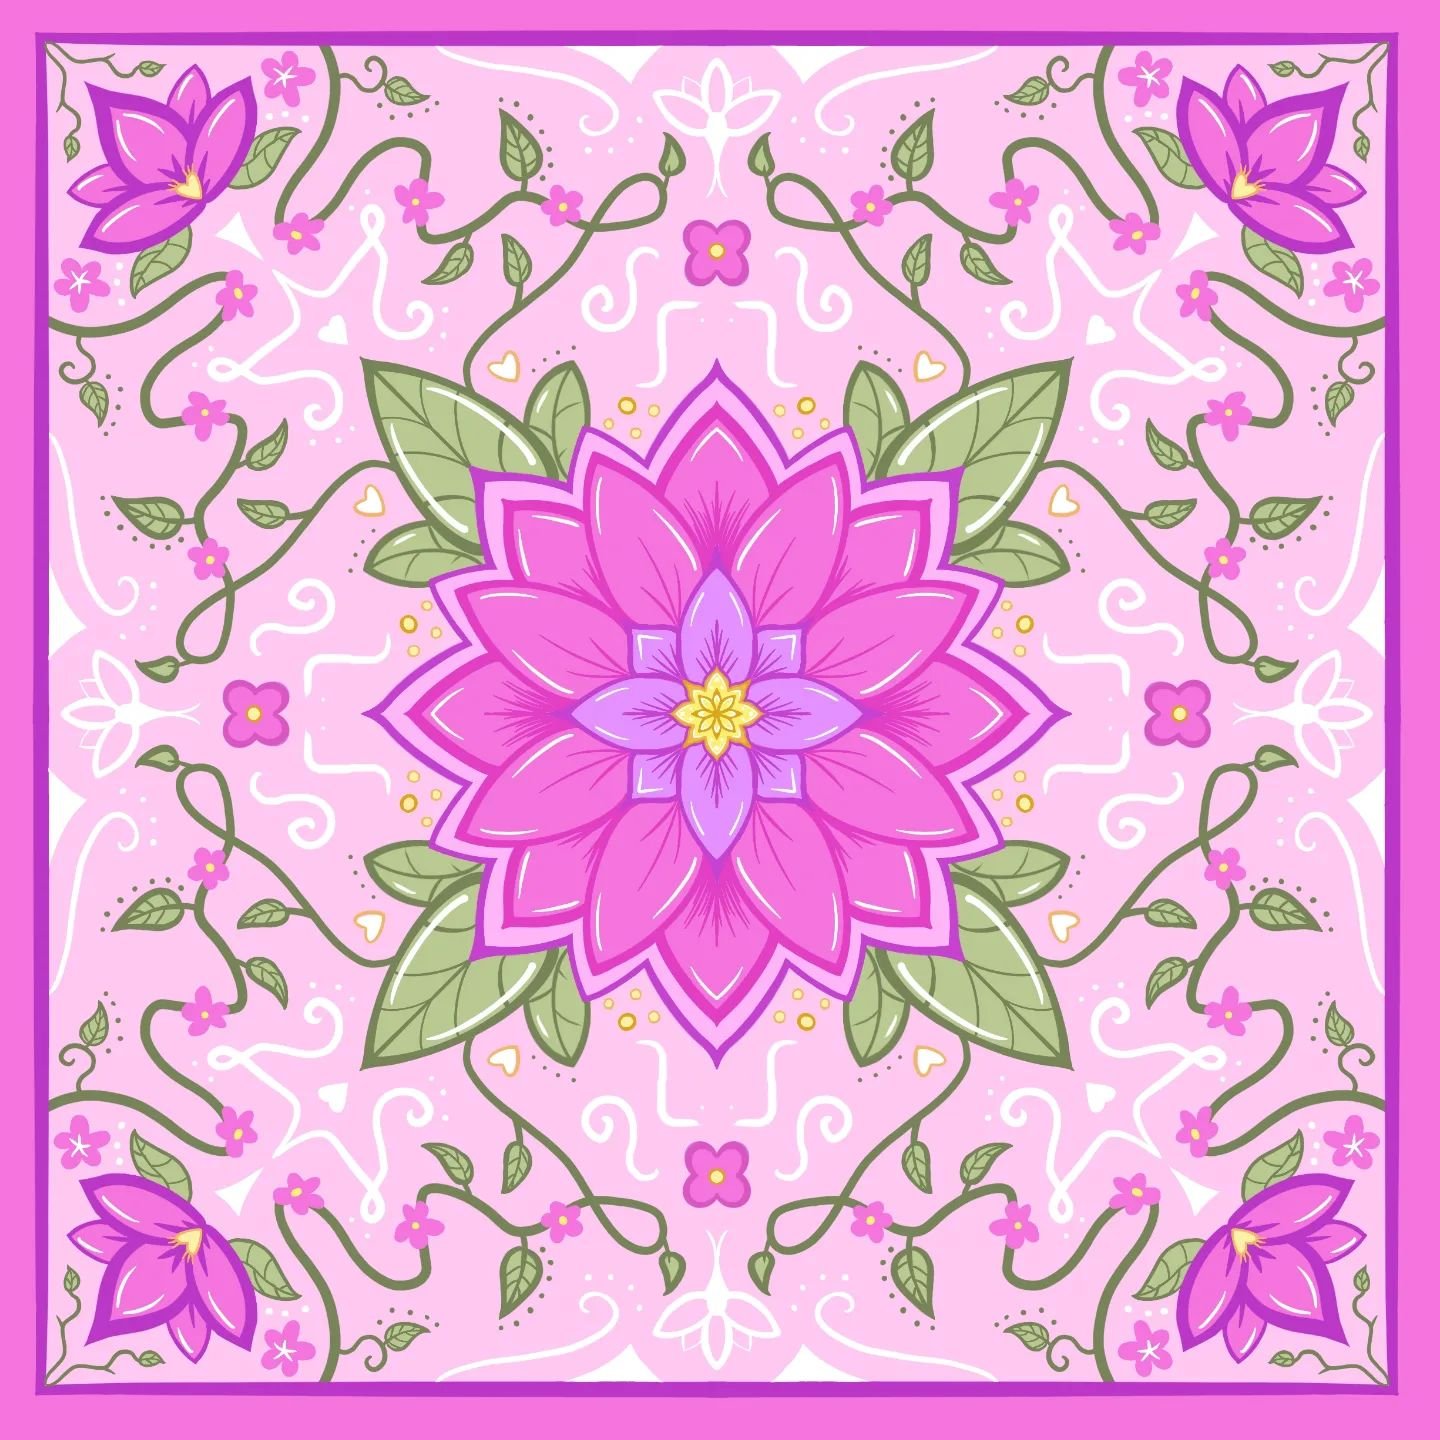 Radial bloom 🌸 2024 
210 x 210 mm

Experimental hand drawn floral tile using digital radial symmetry on @procreate by @elfscarlett 

#digitalart #floralart #symmetry #procreateillustration
#digitalillustration #liverpoolartist #flowersofinstagram